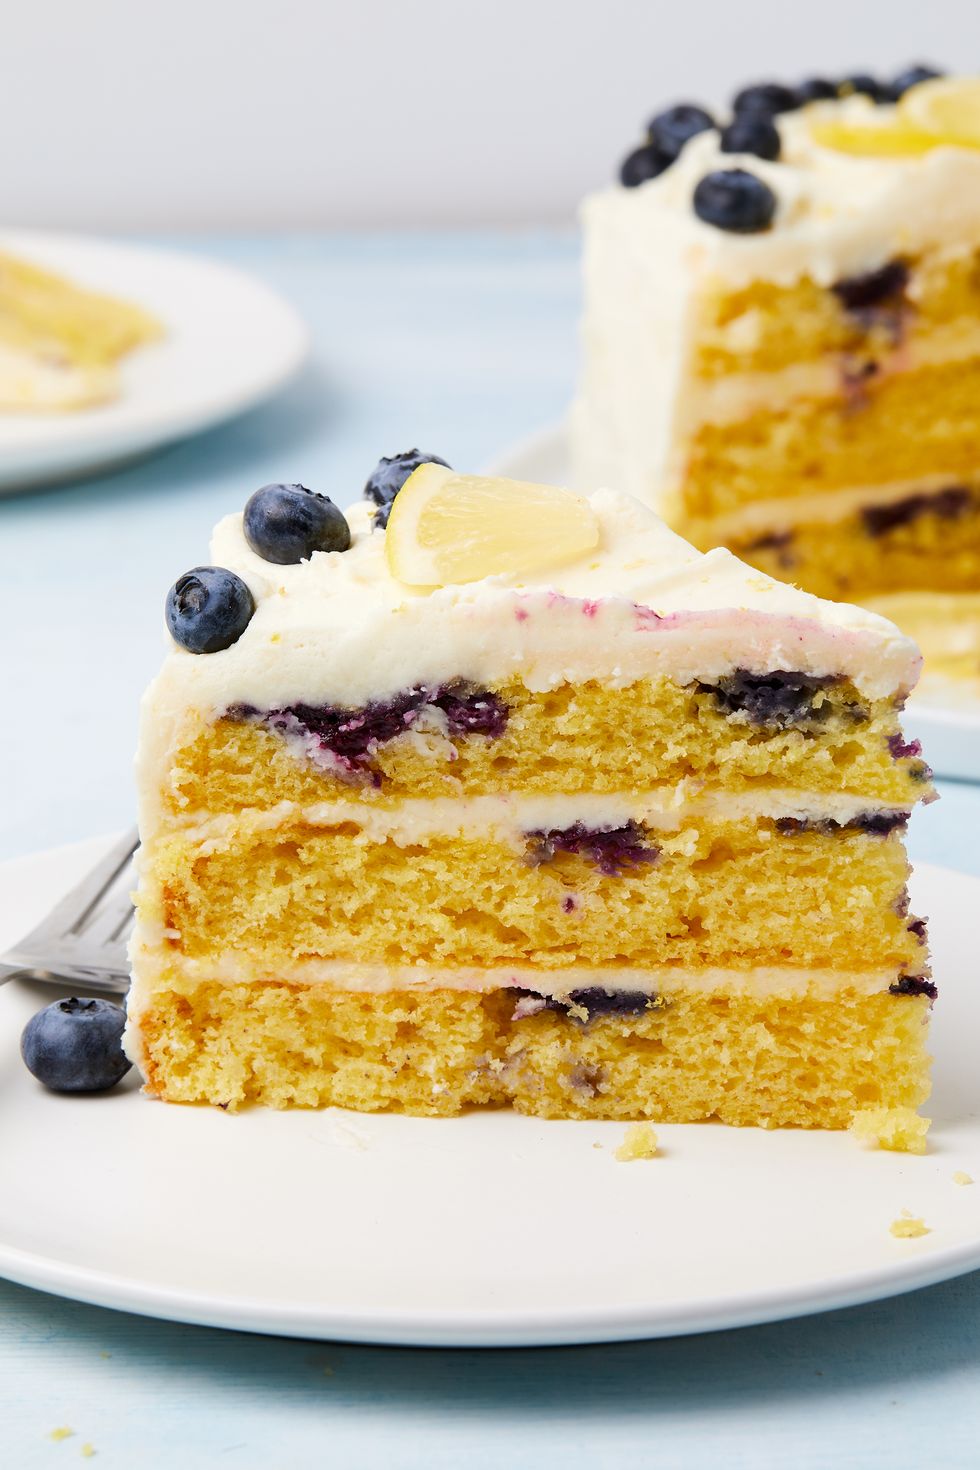 30 Best Lemon-Blueberry Desserts - Sweet Blueberry-Lemon Ideas